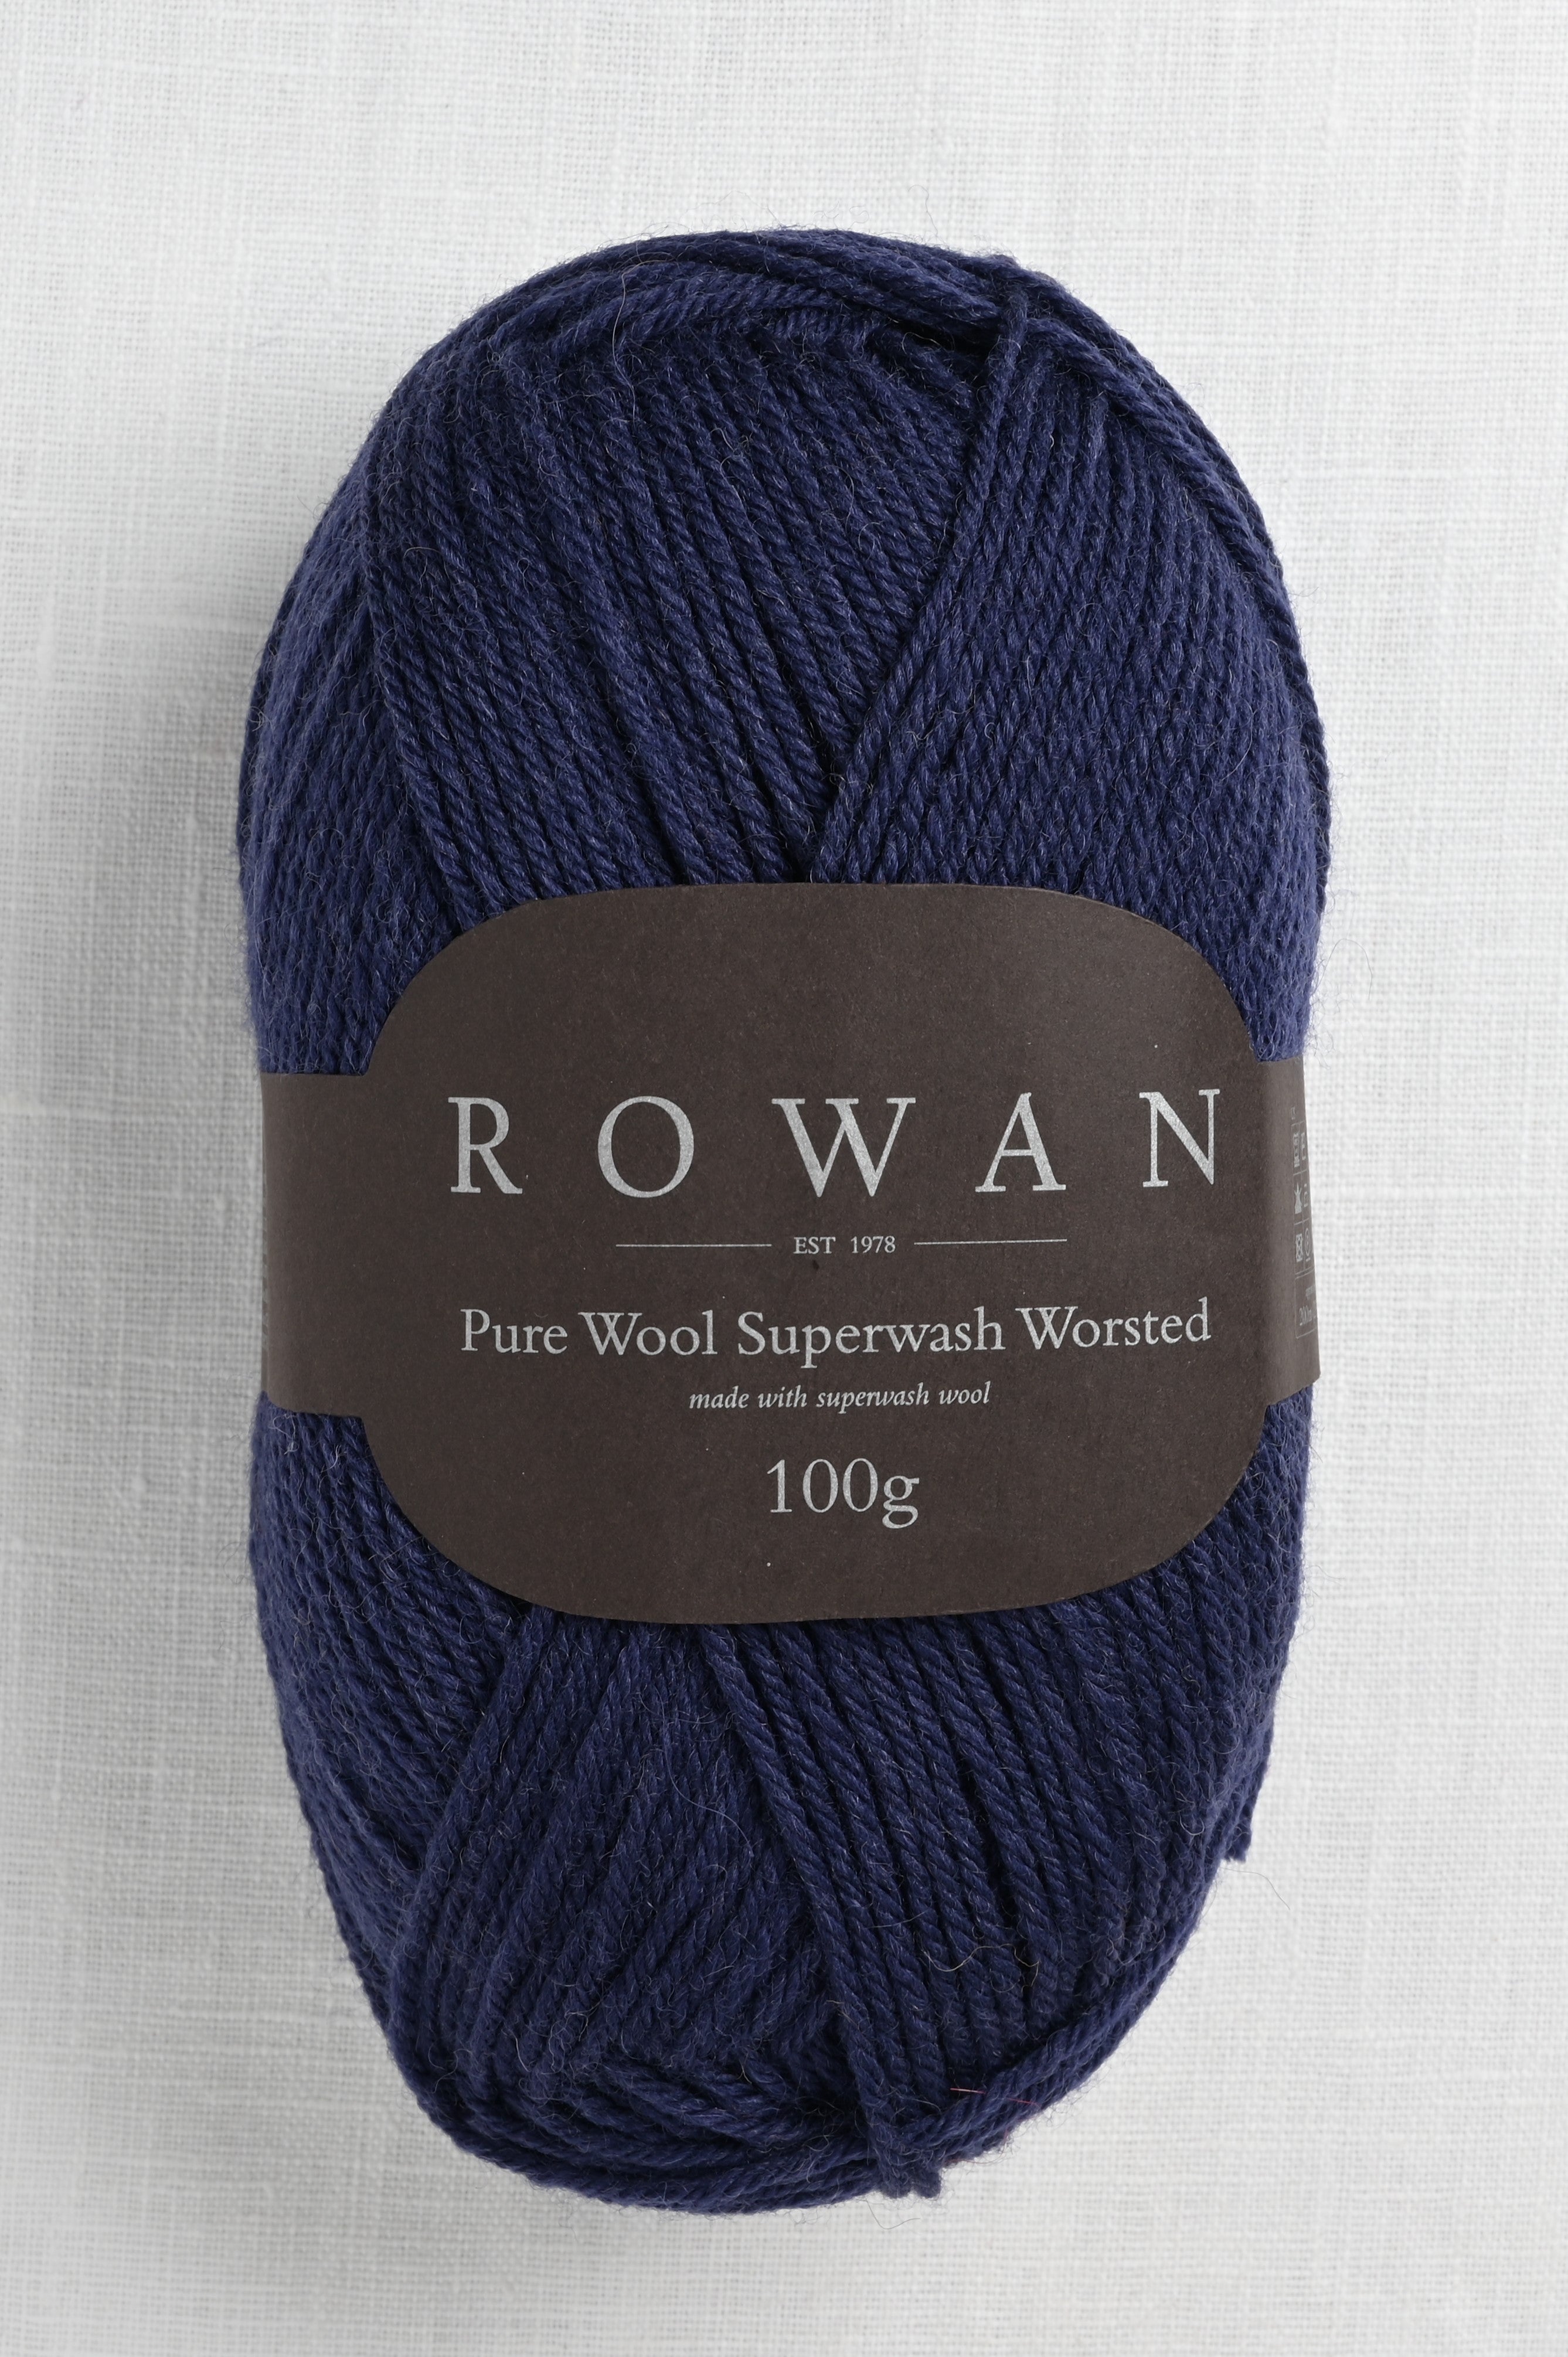 Wool / Yarn for Sale, swap or trade